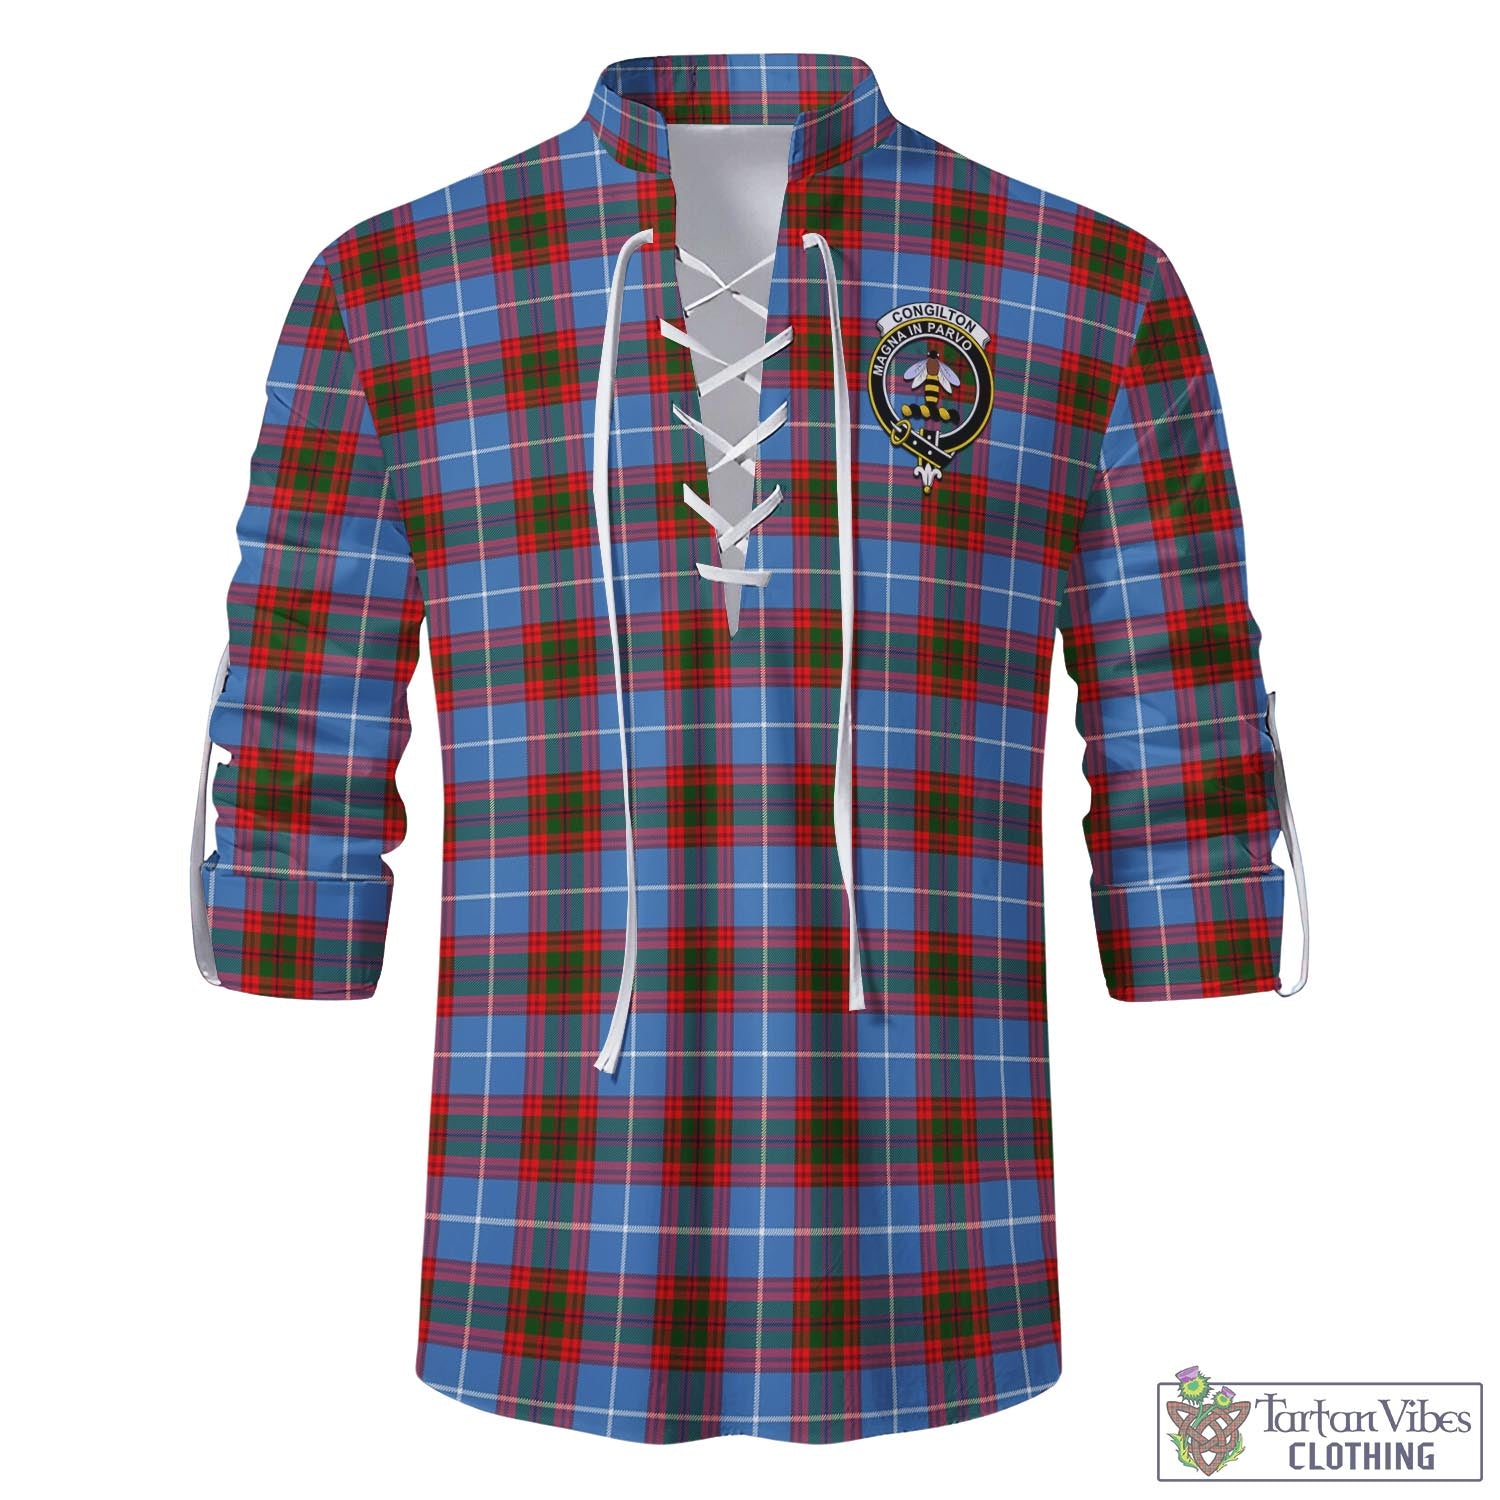 Tartan Vibes Clothing Congilton Tartan Men's Scottish Traditional Jacobite Ghillie Kilt Shirt with Family Crest